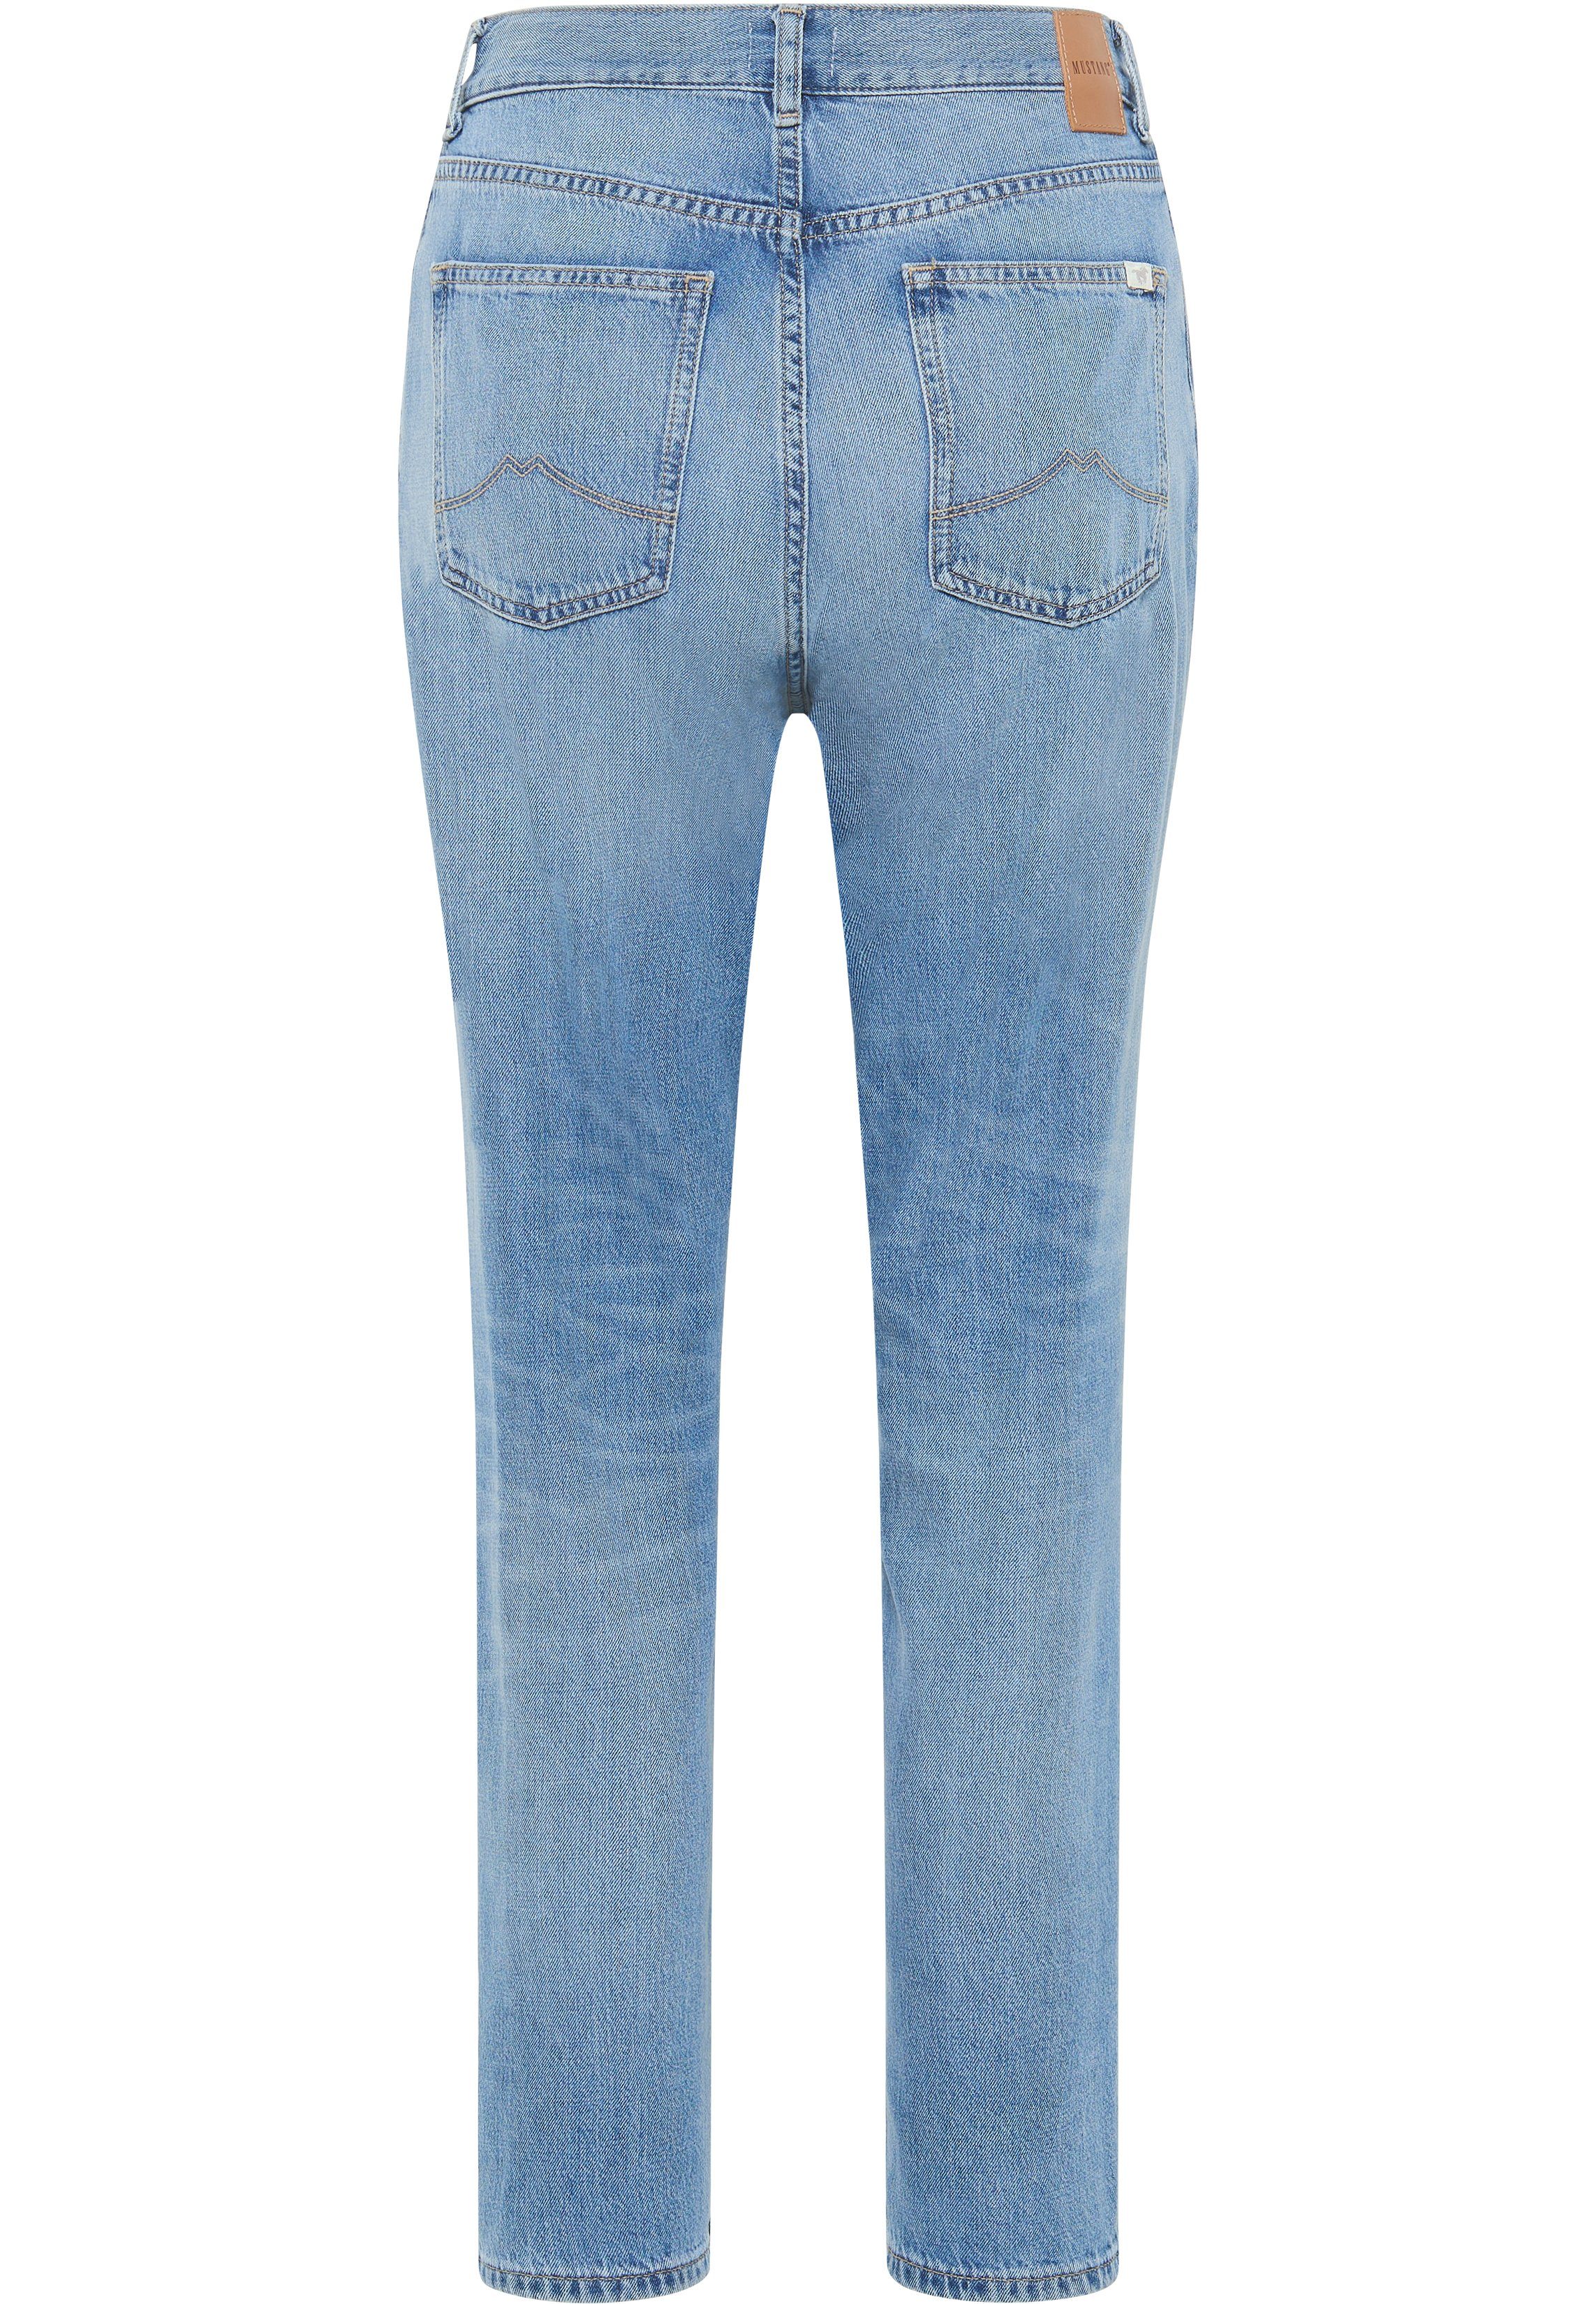 MUSTANG hellblau-5000412 Slim Relaxed Style 5-Pocket-Jeans Brooks